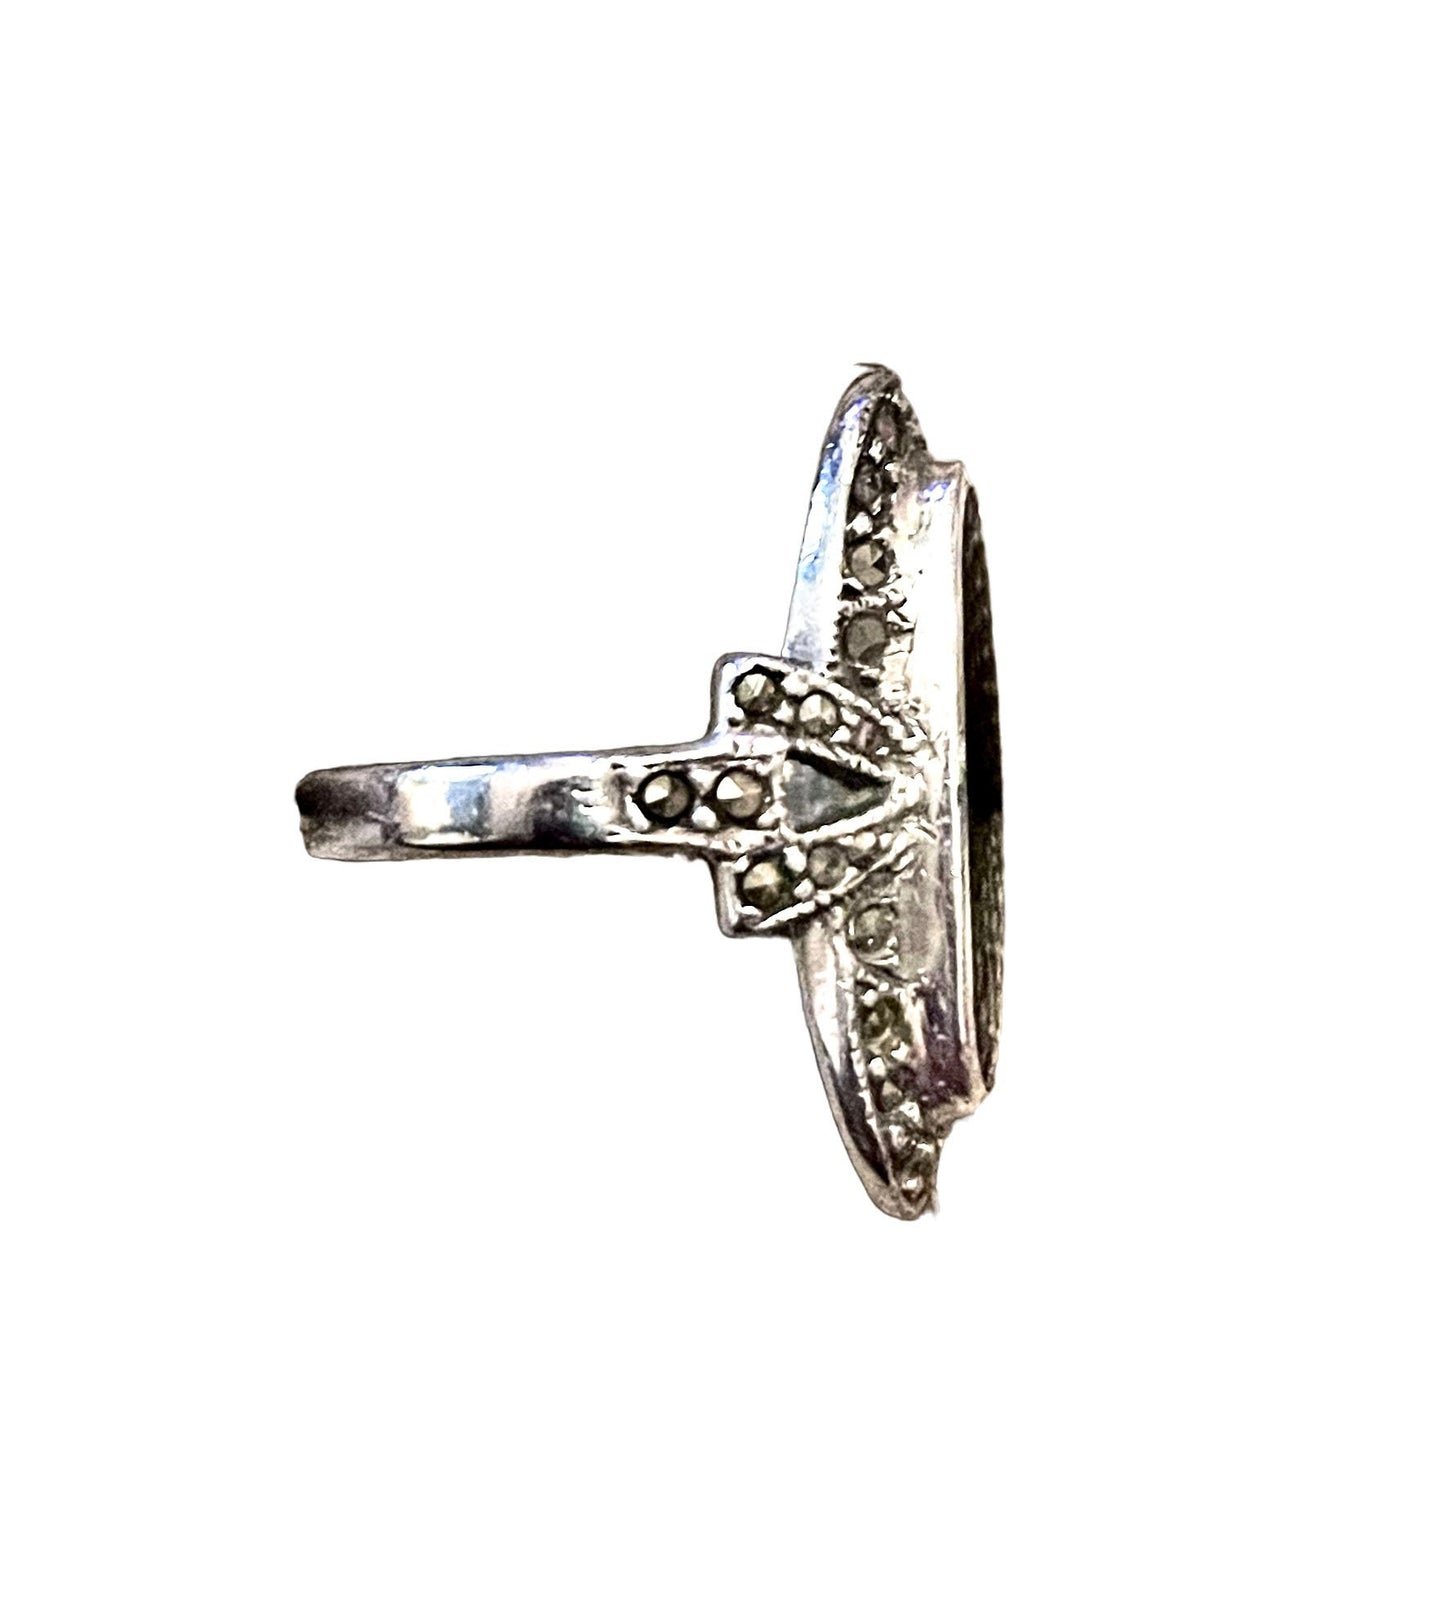 Black Onyx & Marcasite Bezel Set Sterling Silver Oval Art Deco Ring